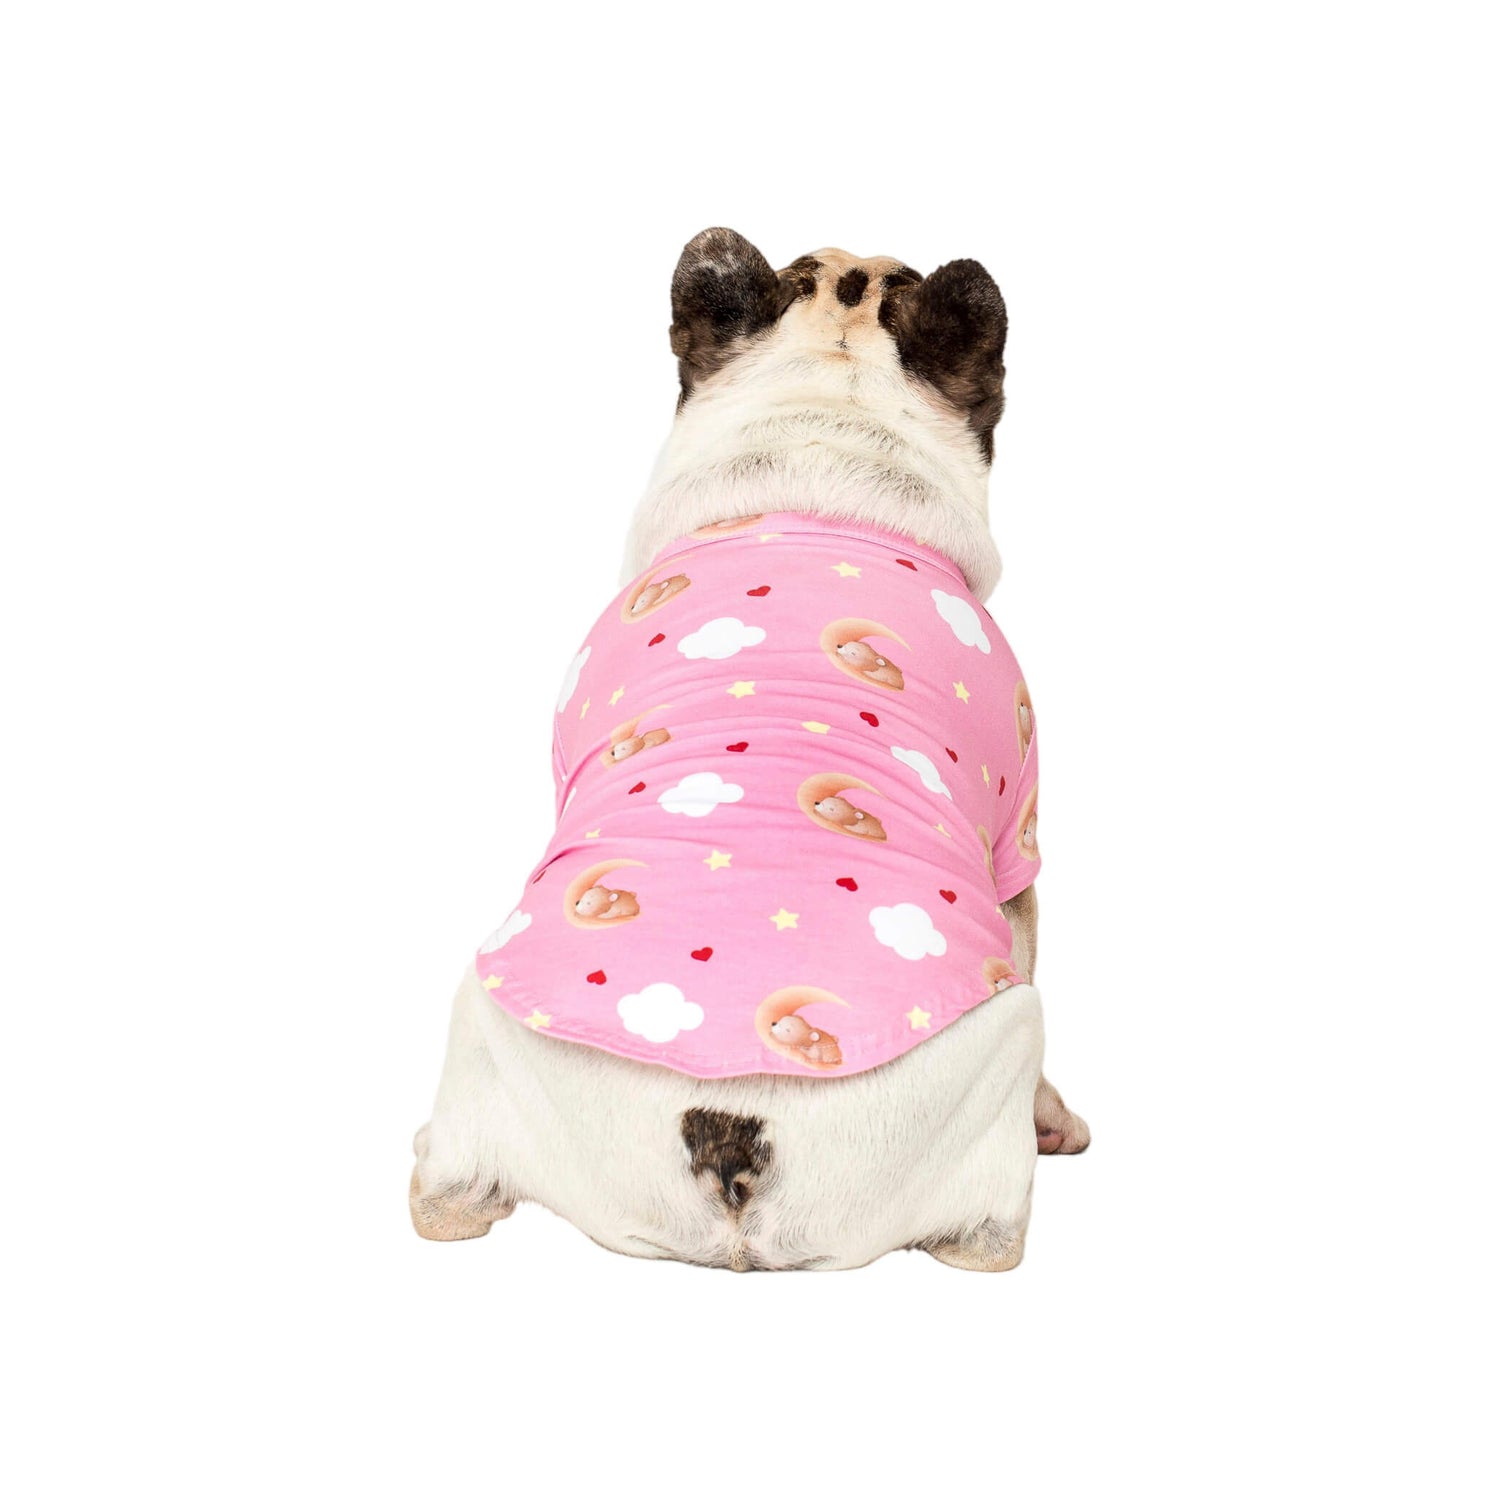 Dog pyjamas: Lil Dreamer pink